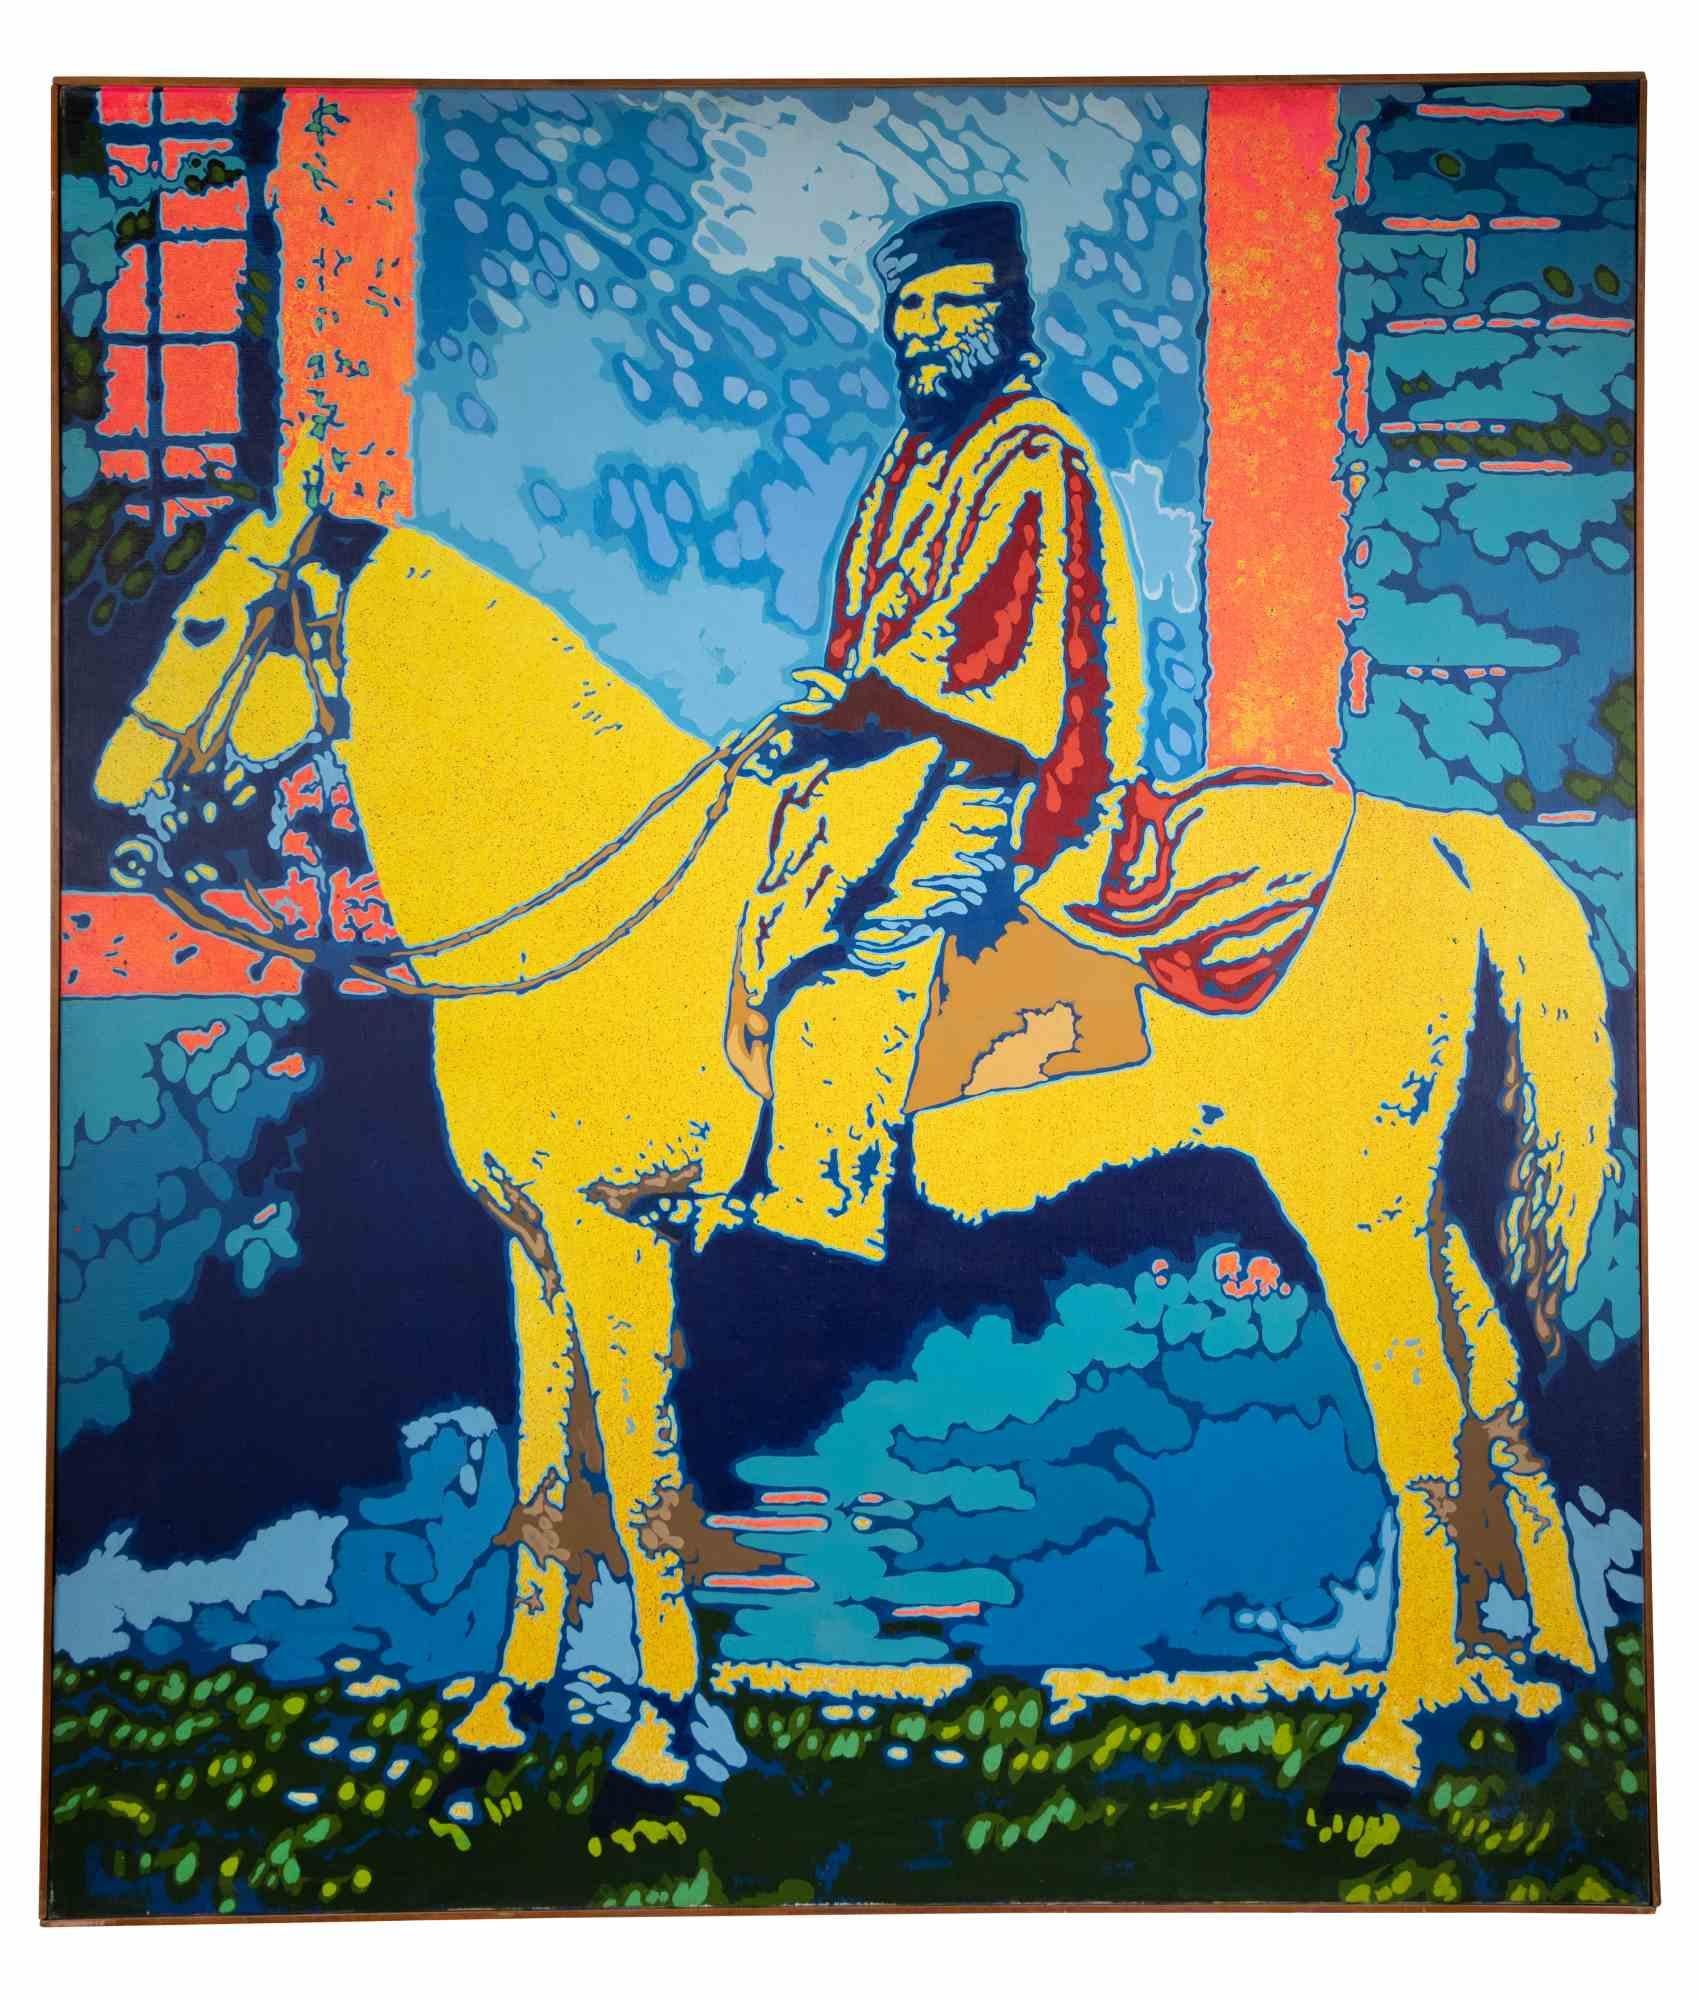 Garibaldi Riding his Horse - Oil Painting by Giacomo Spadari - 1977 - Art by Gaingiacomo Spadari